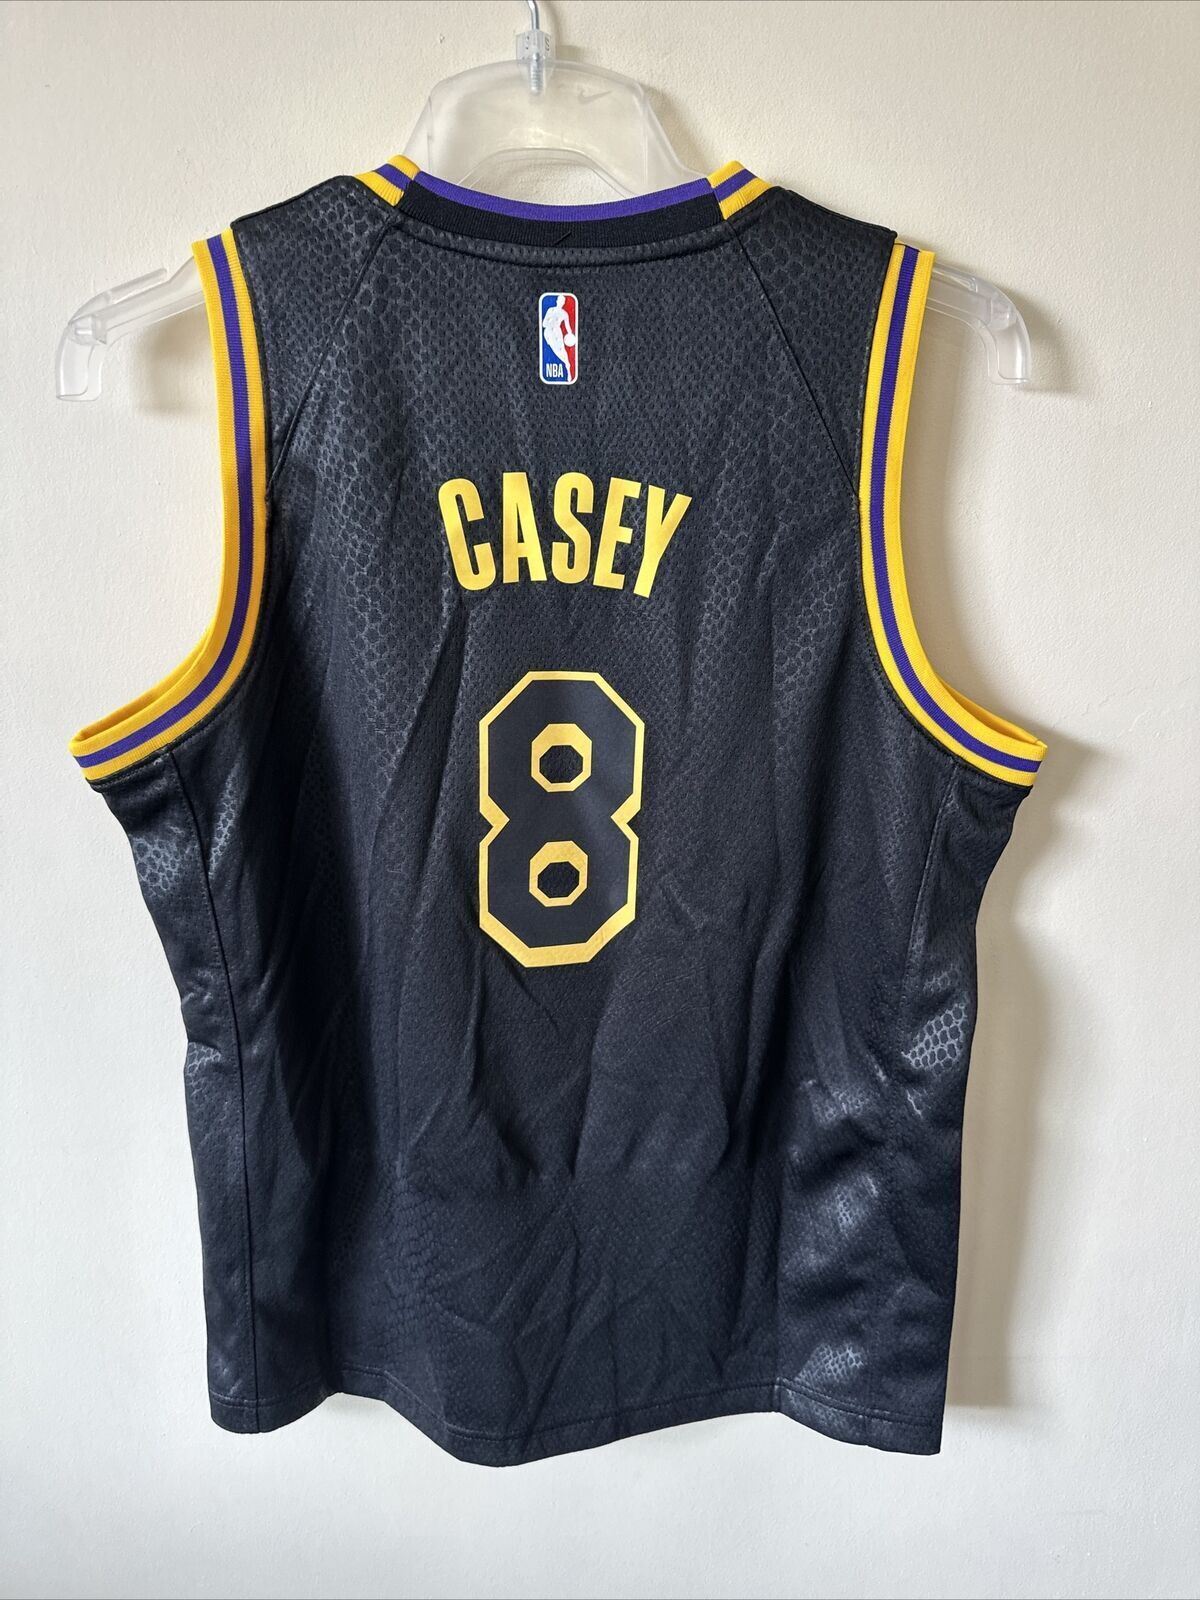 Nike NBA LA Lakers Swingman Jersey Basketball CASEY 8 Youth 12-13 Years